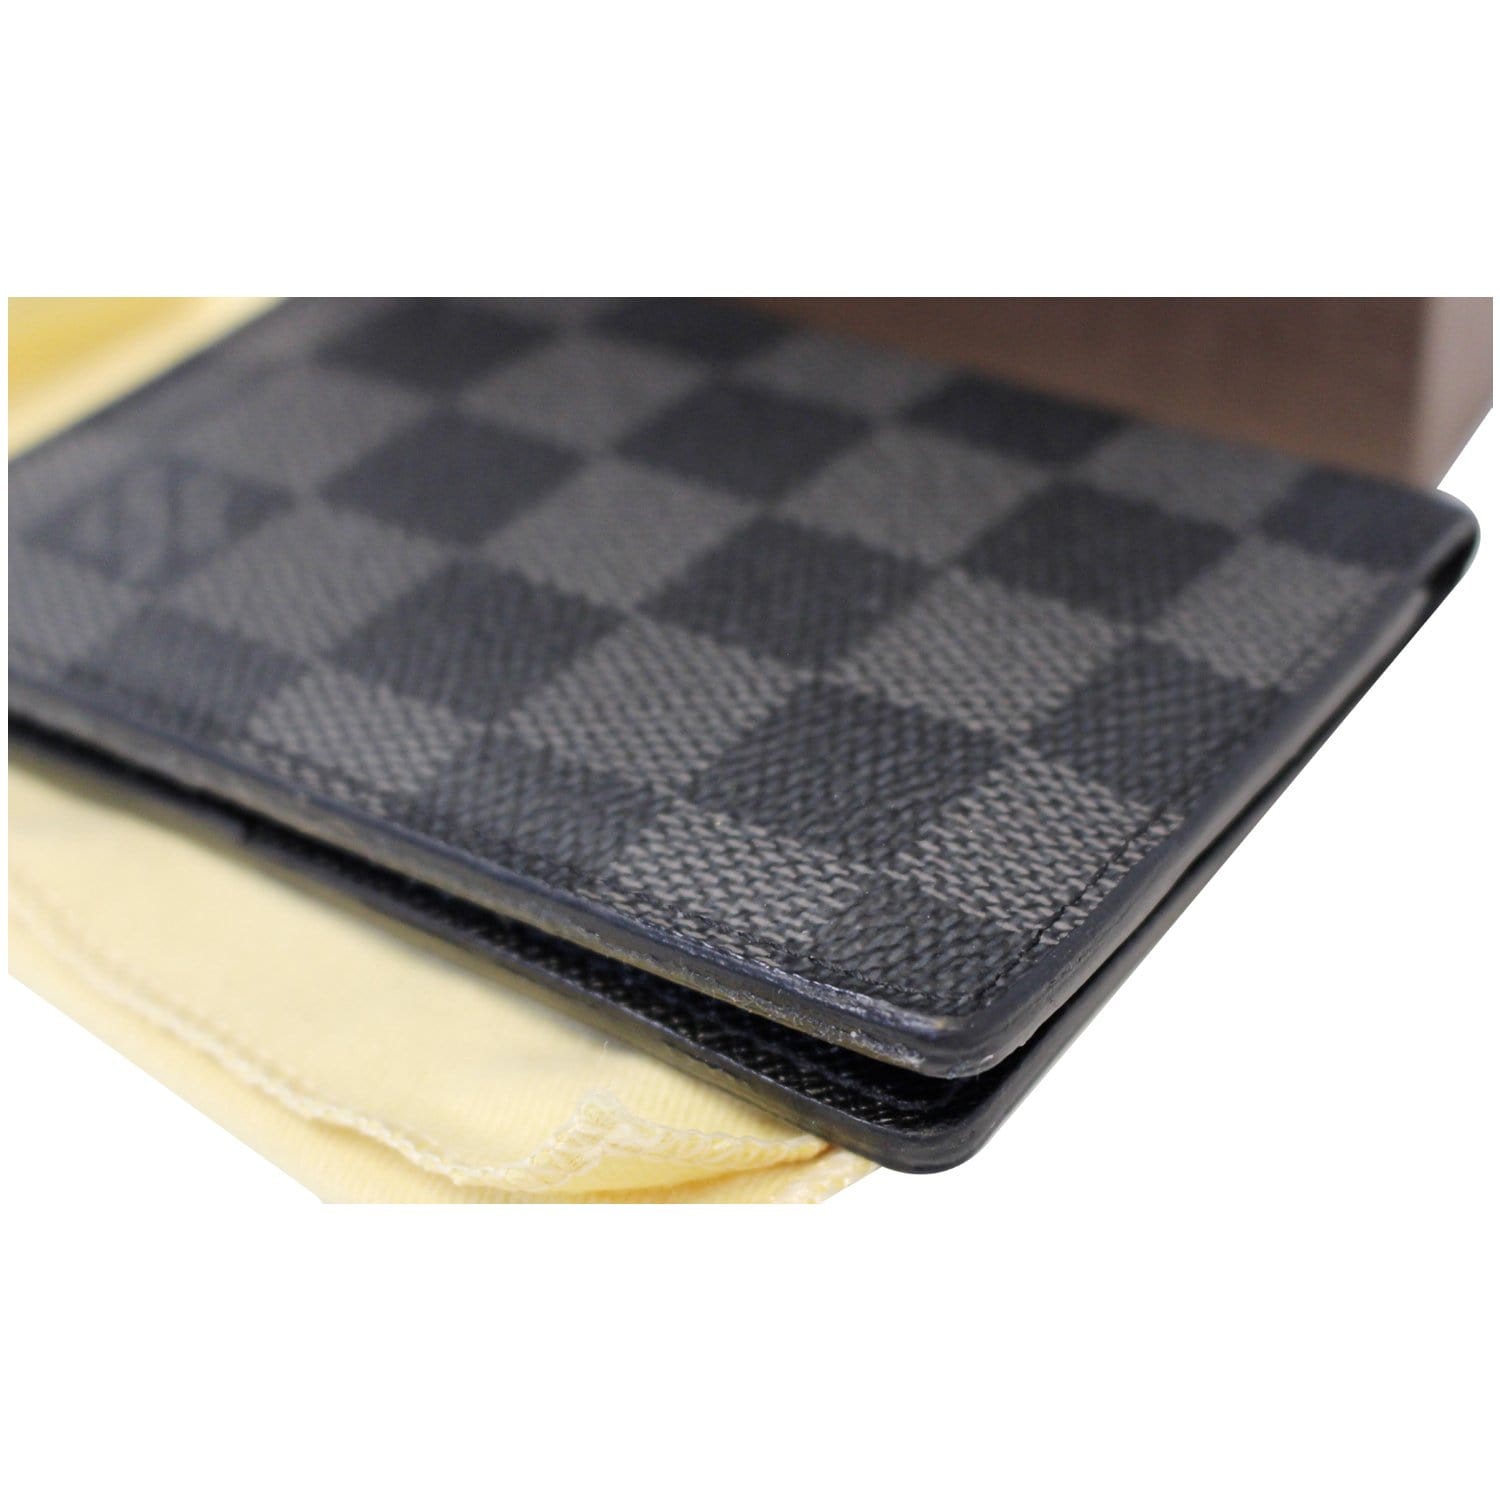 Louis Vuitton Organizer wallet in grey Graphite shopping canvas